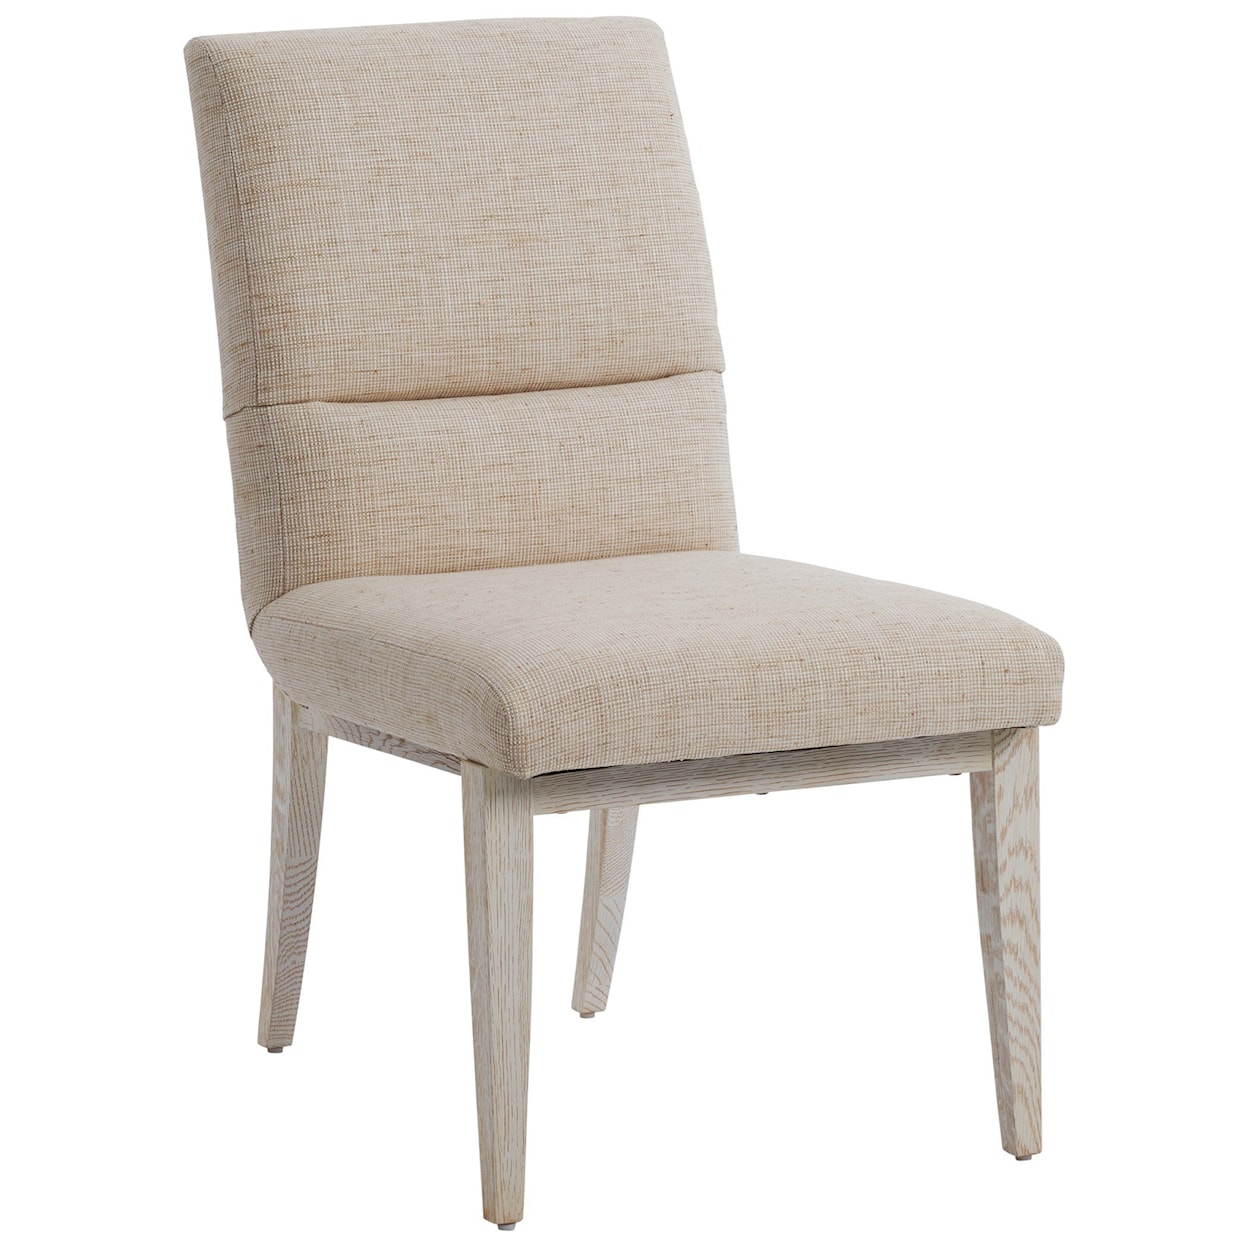 Barclay Butera Carmel Palmero Upholstered Side Chair